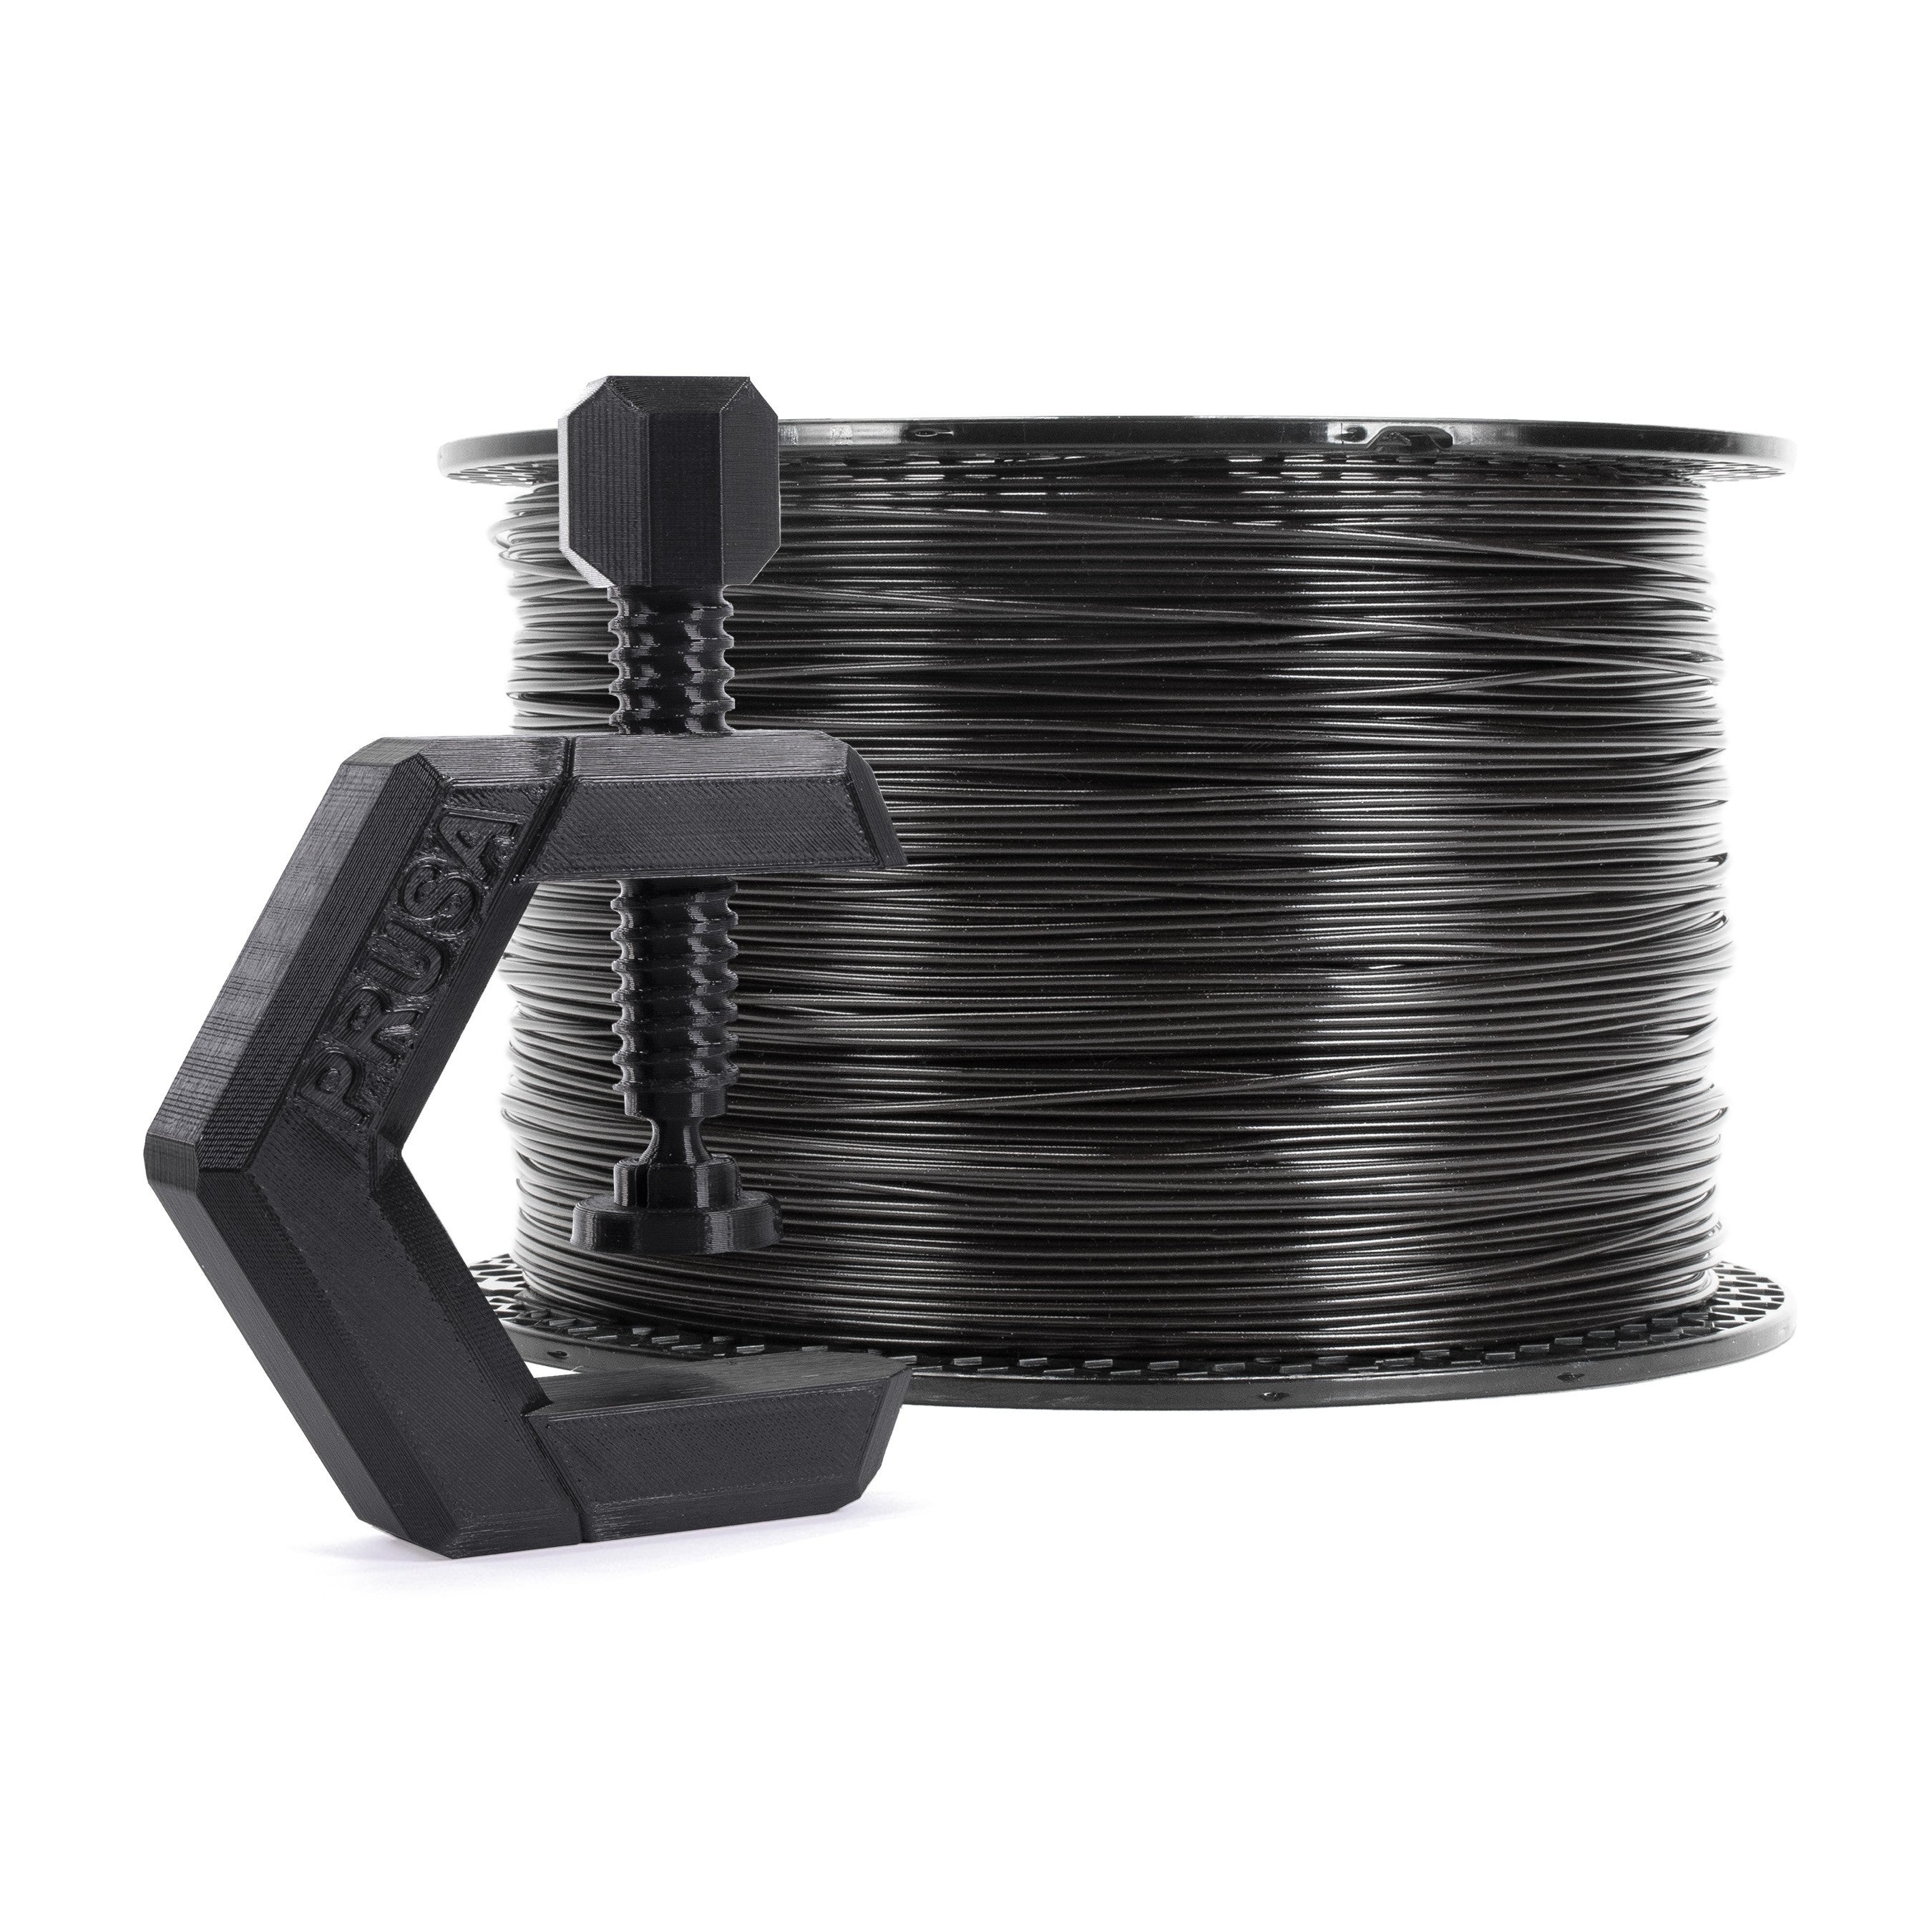 Prusa Prusament PETG 3D Printing Filament 1.75mm 2kg